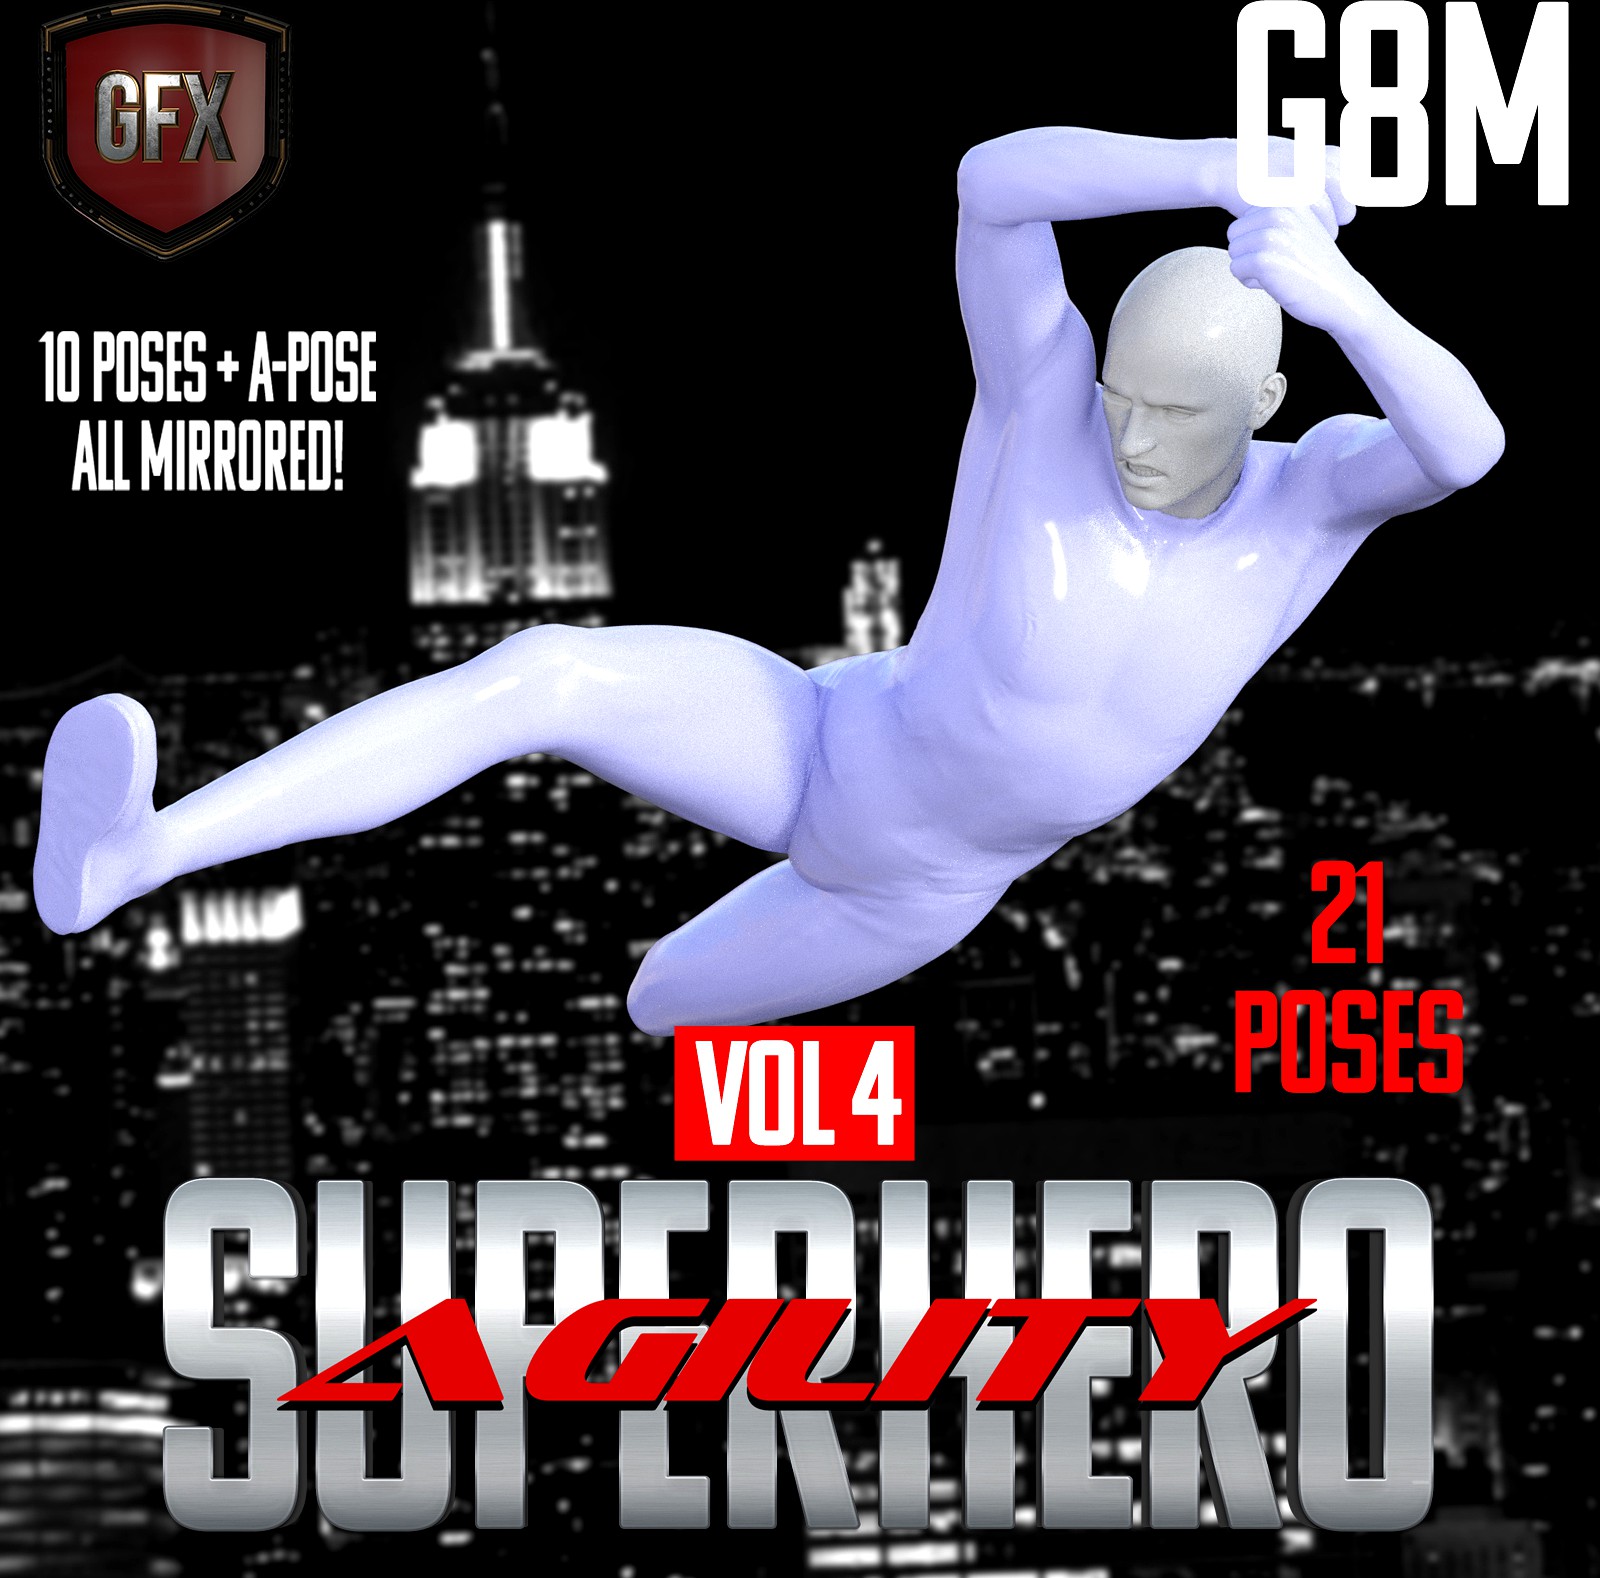 SuperHero Agility for G8M Volume 4